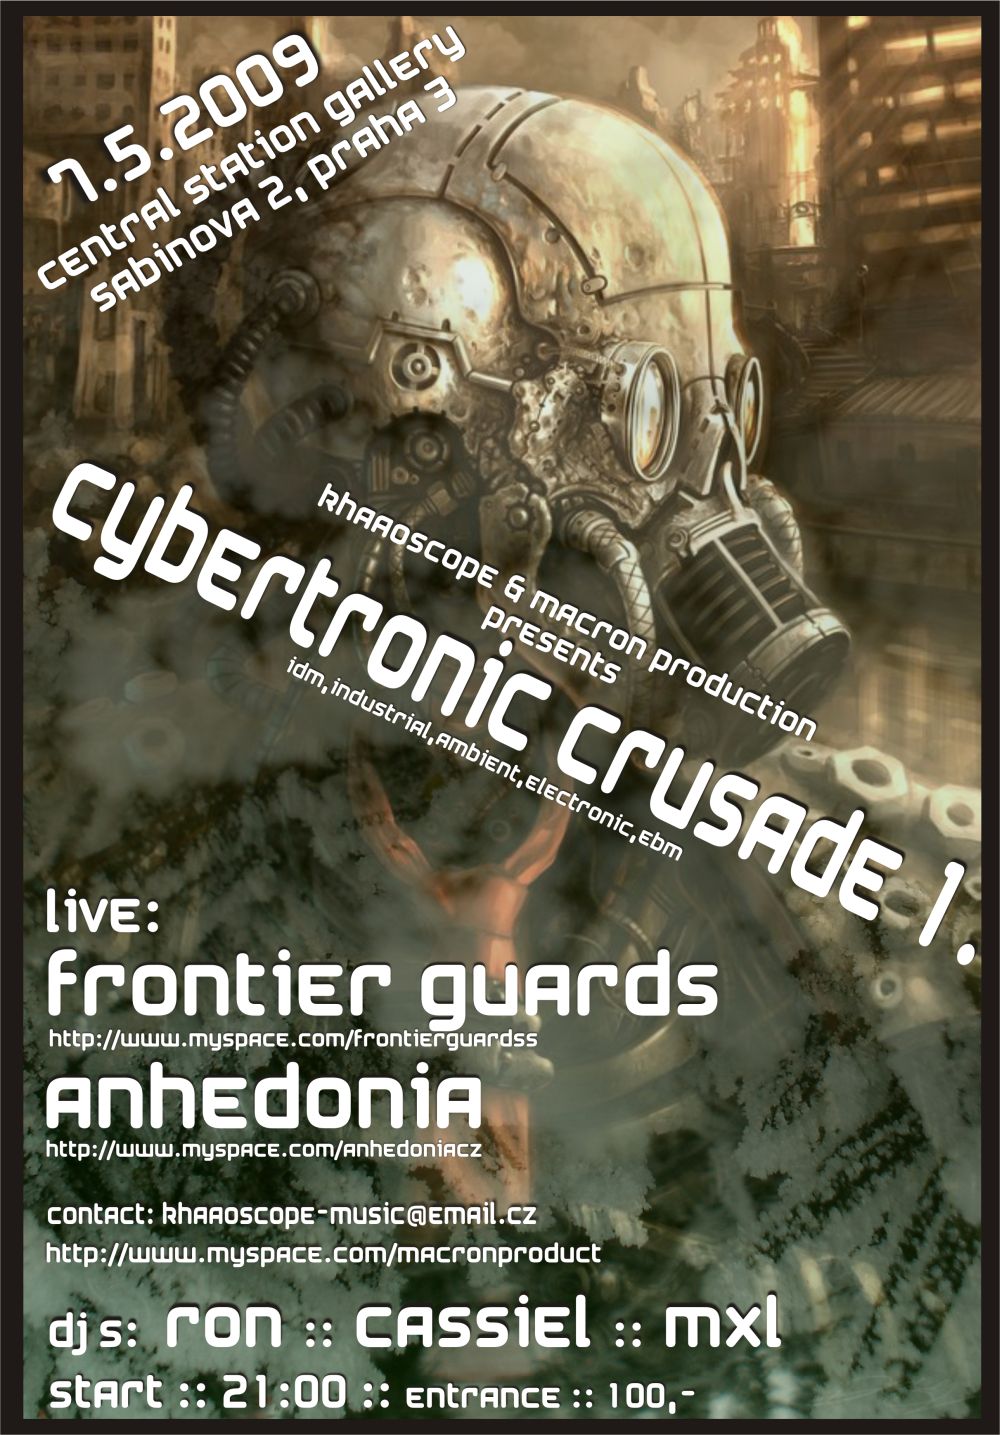 Cybertroic Crusade